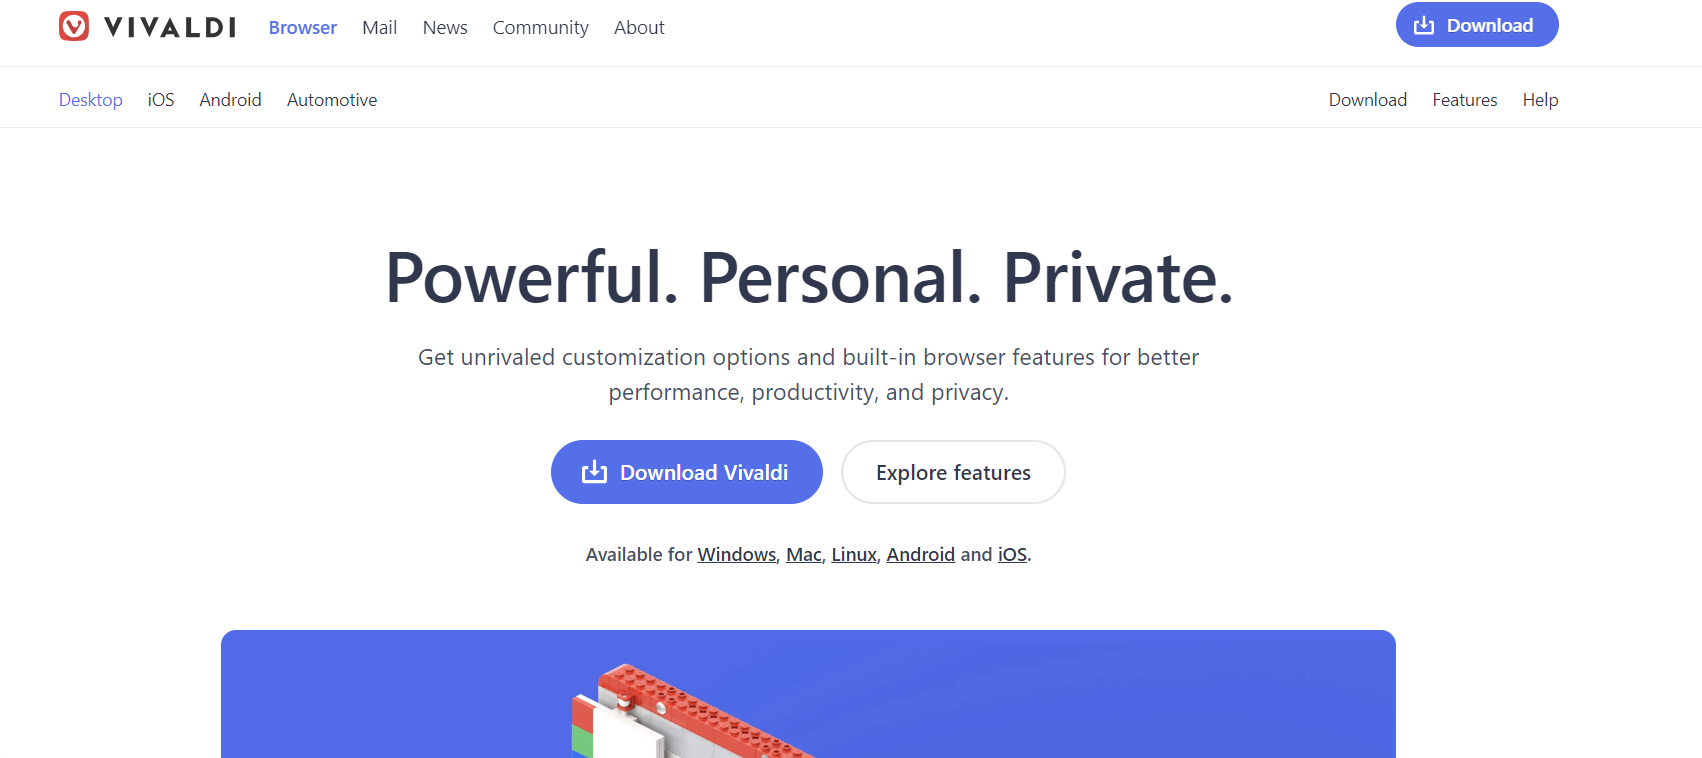 Vivaldi is a freeware, cross-platform web browser developed by Vivaldi Technologies. 